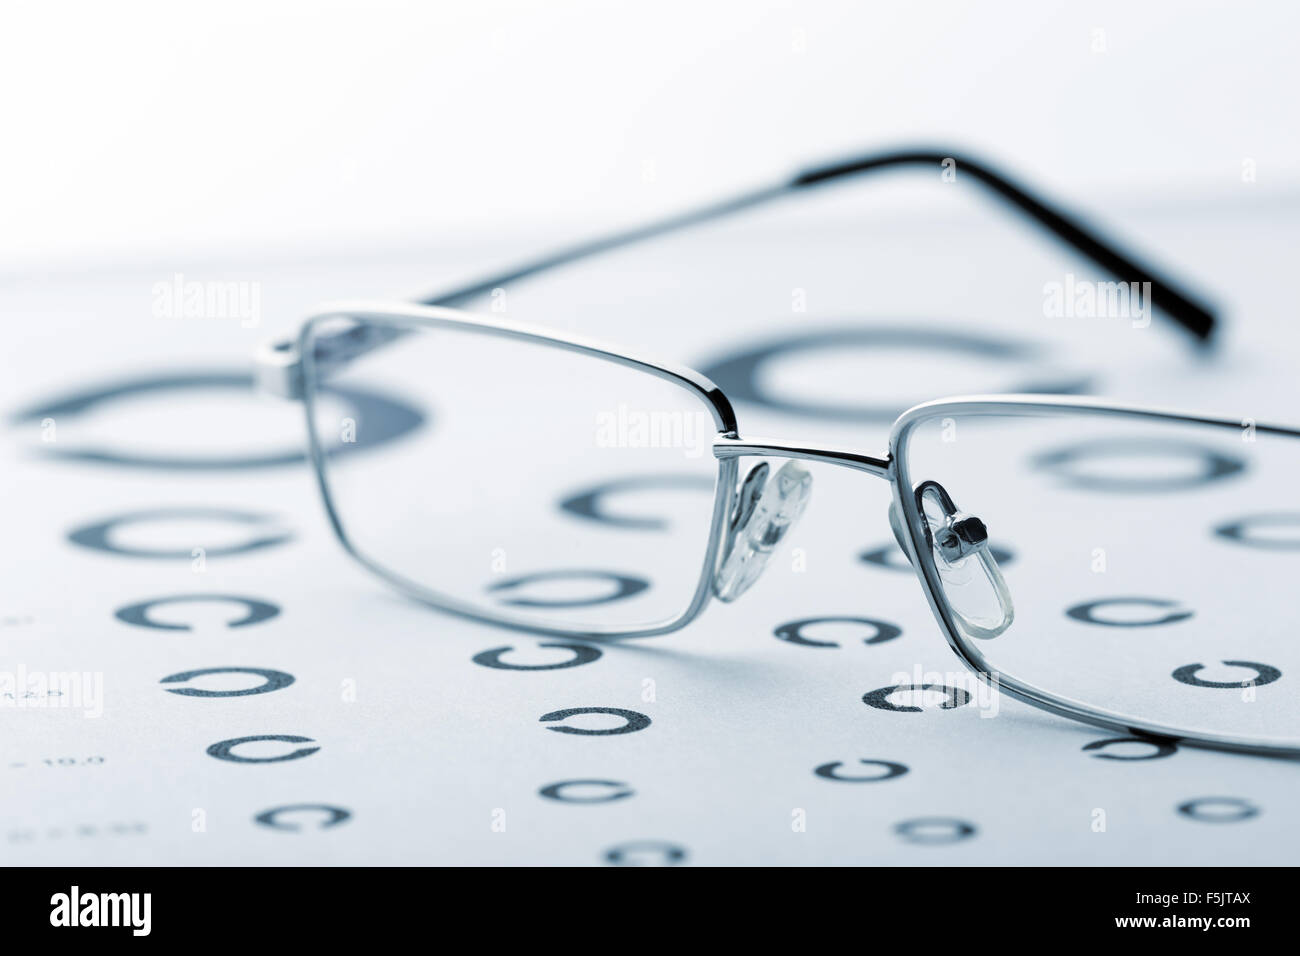 Eye examination chart with glasses Stock Photo